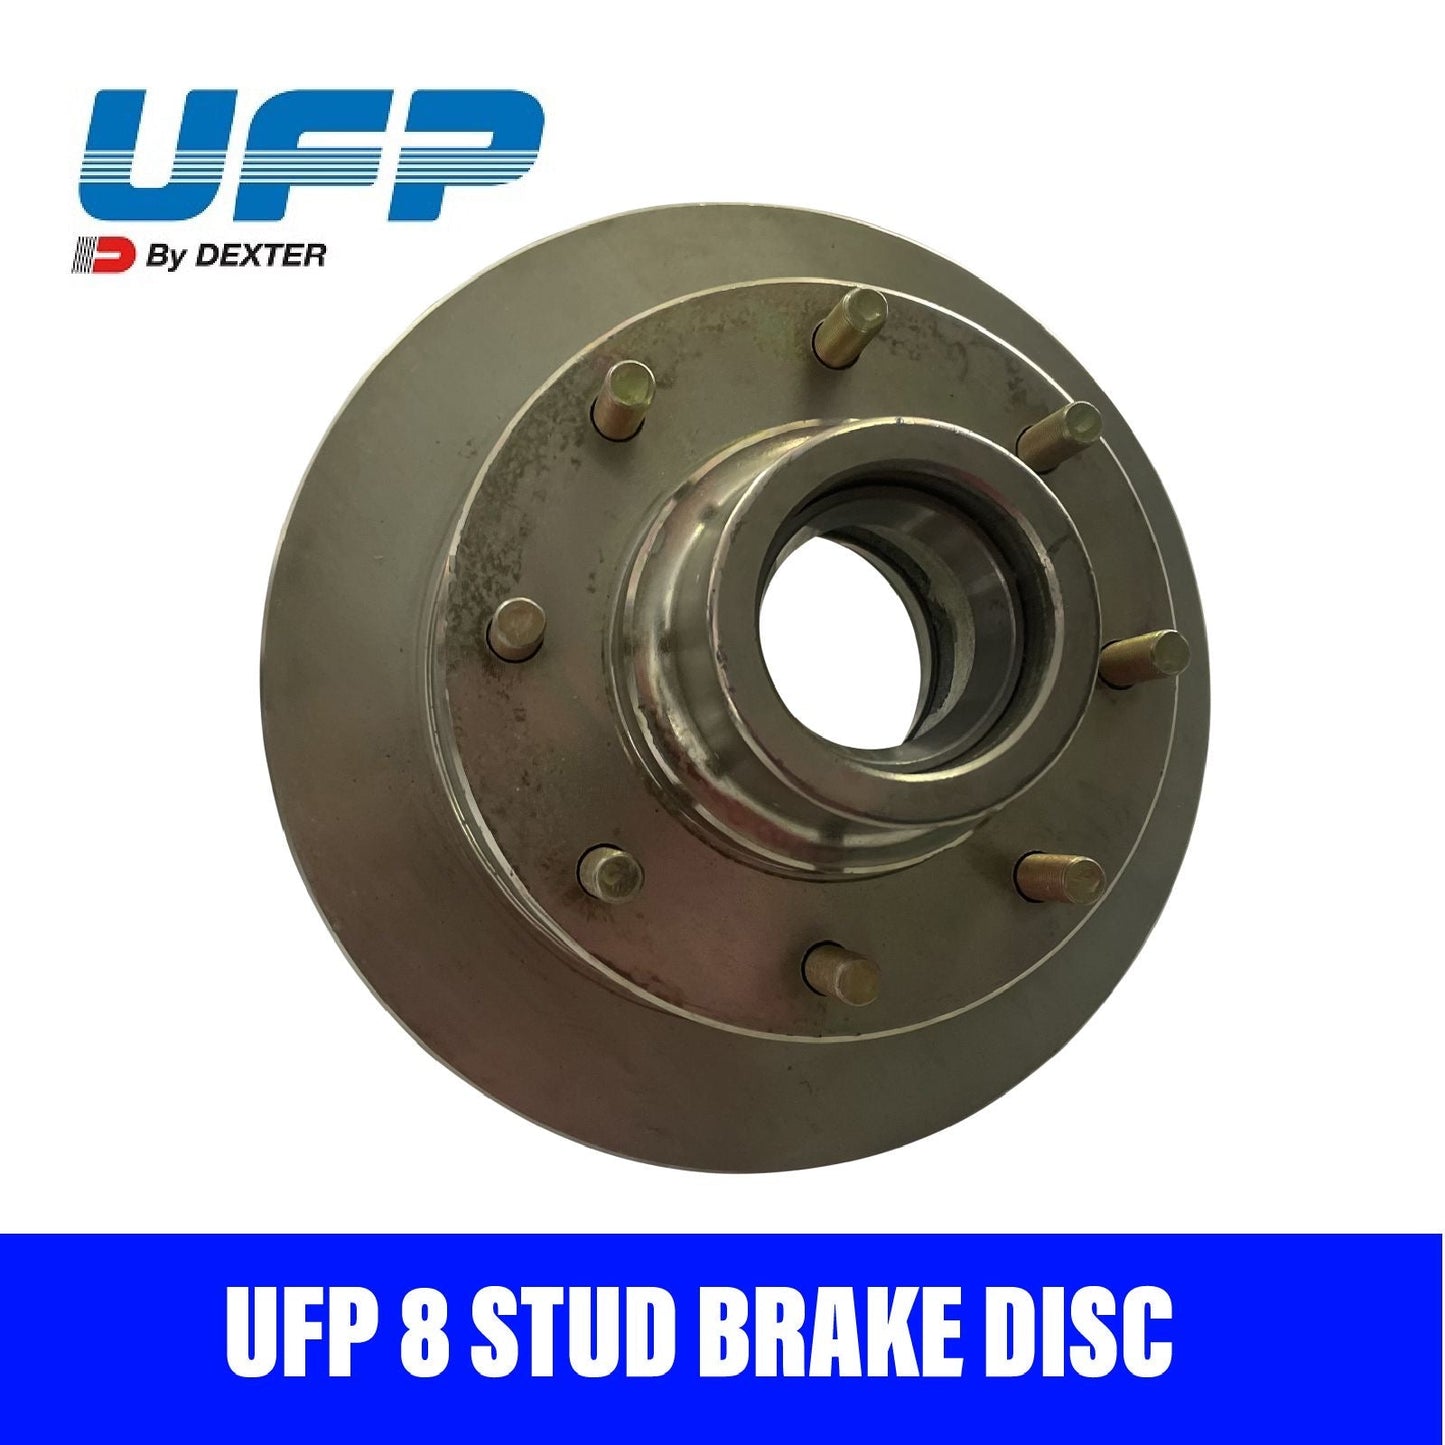 UFP 8 STUD 12 INCH Brake Disc